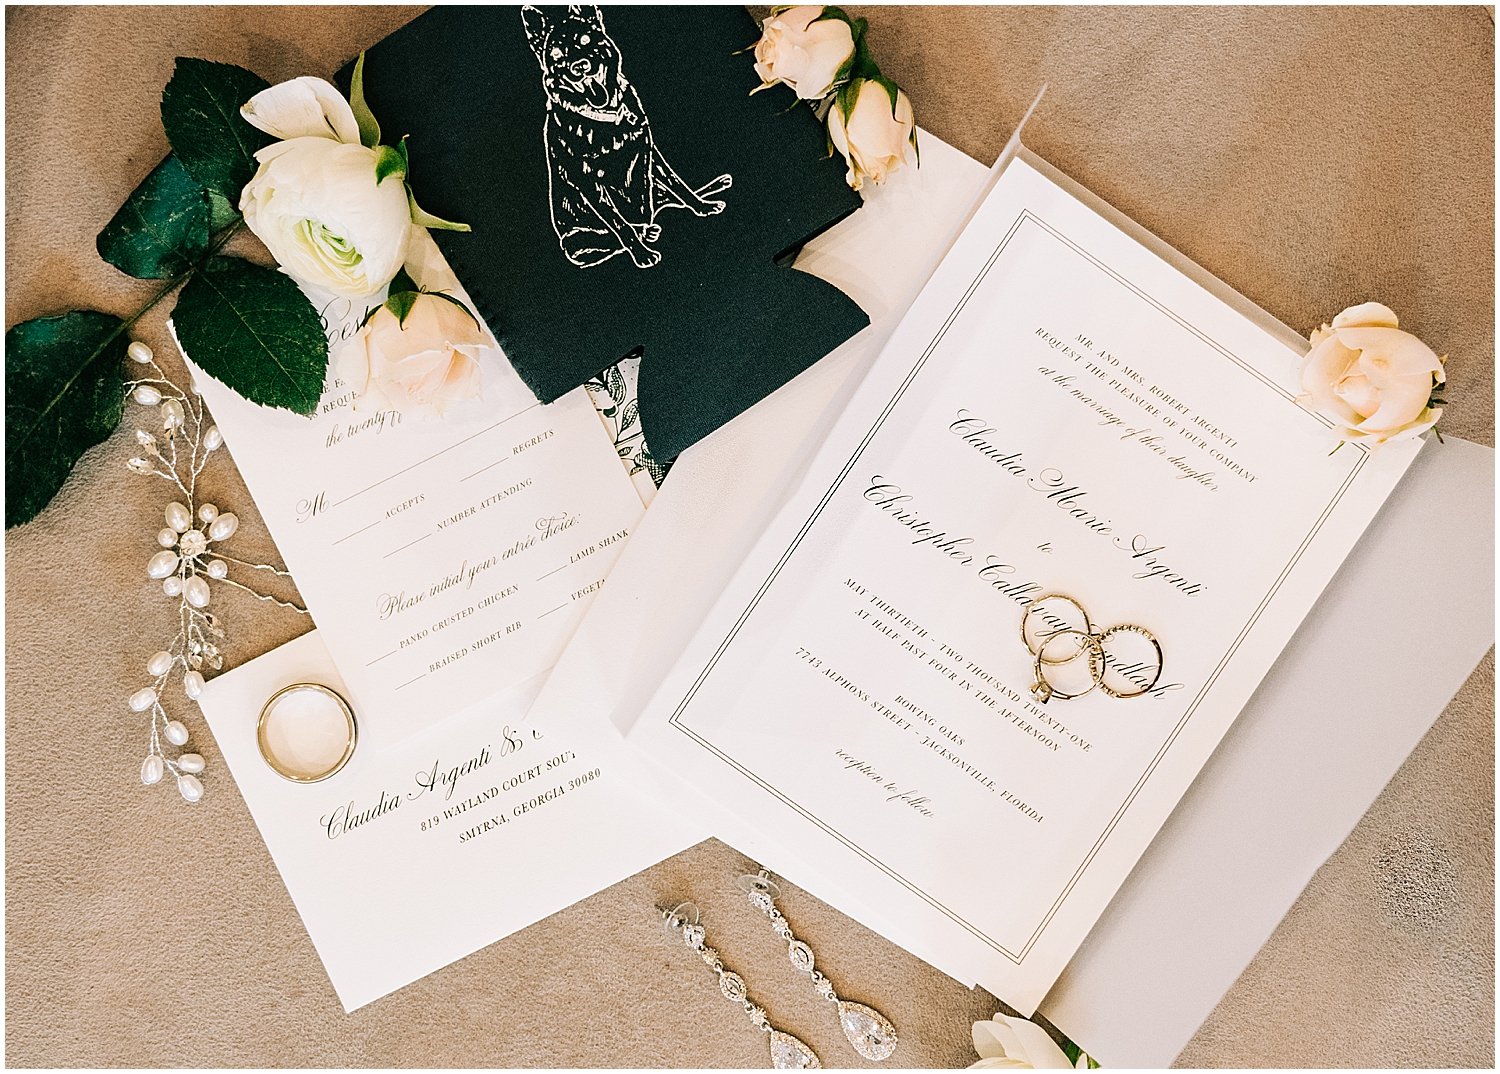  wedding invitations and wedding rings 